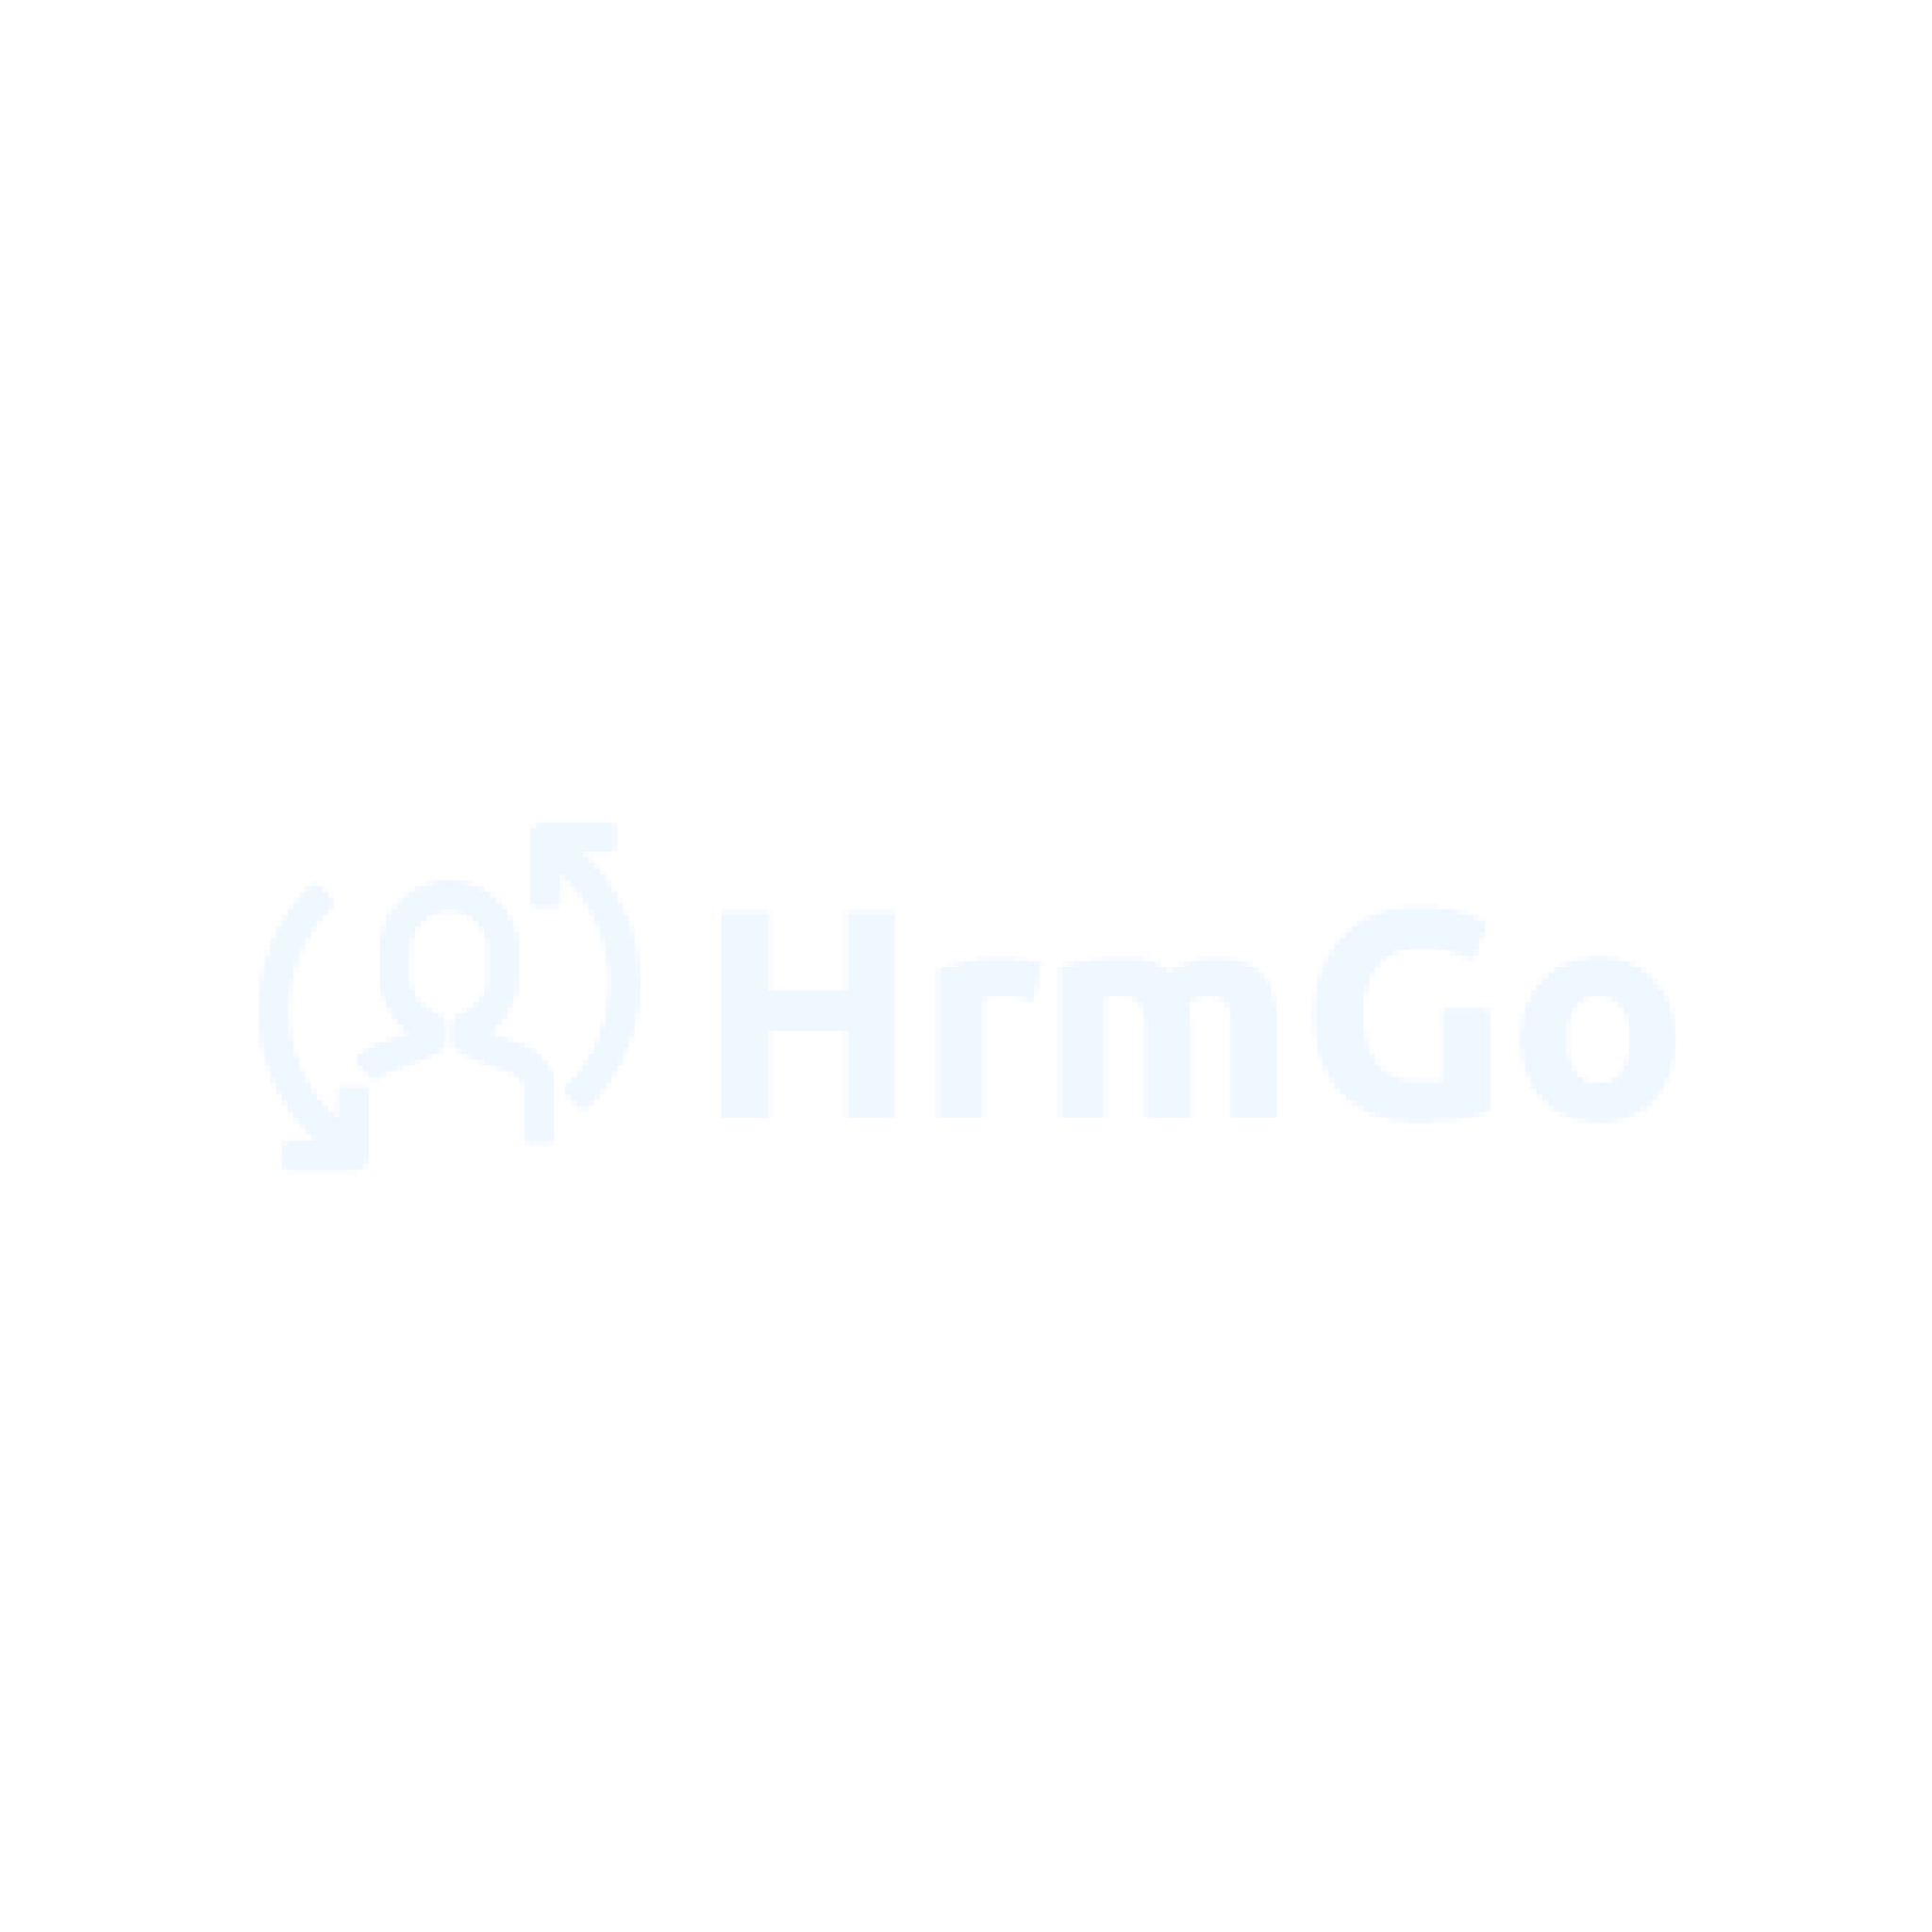 Hrmgo About Logo